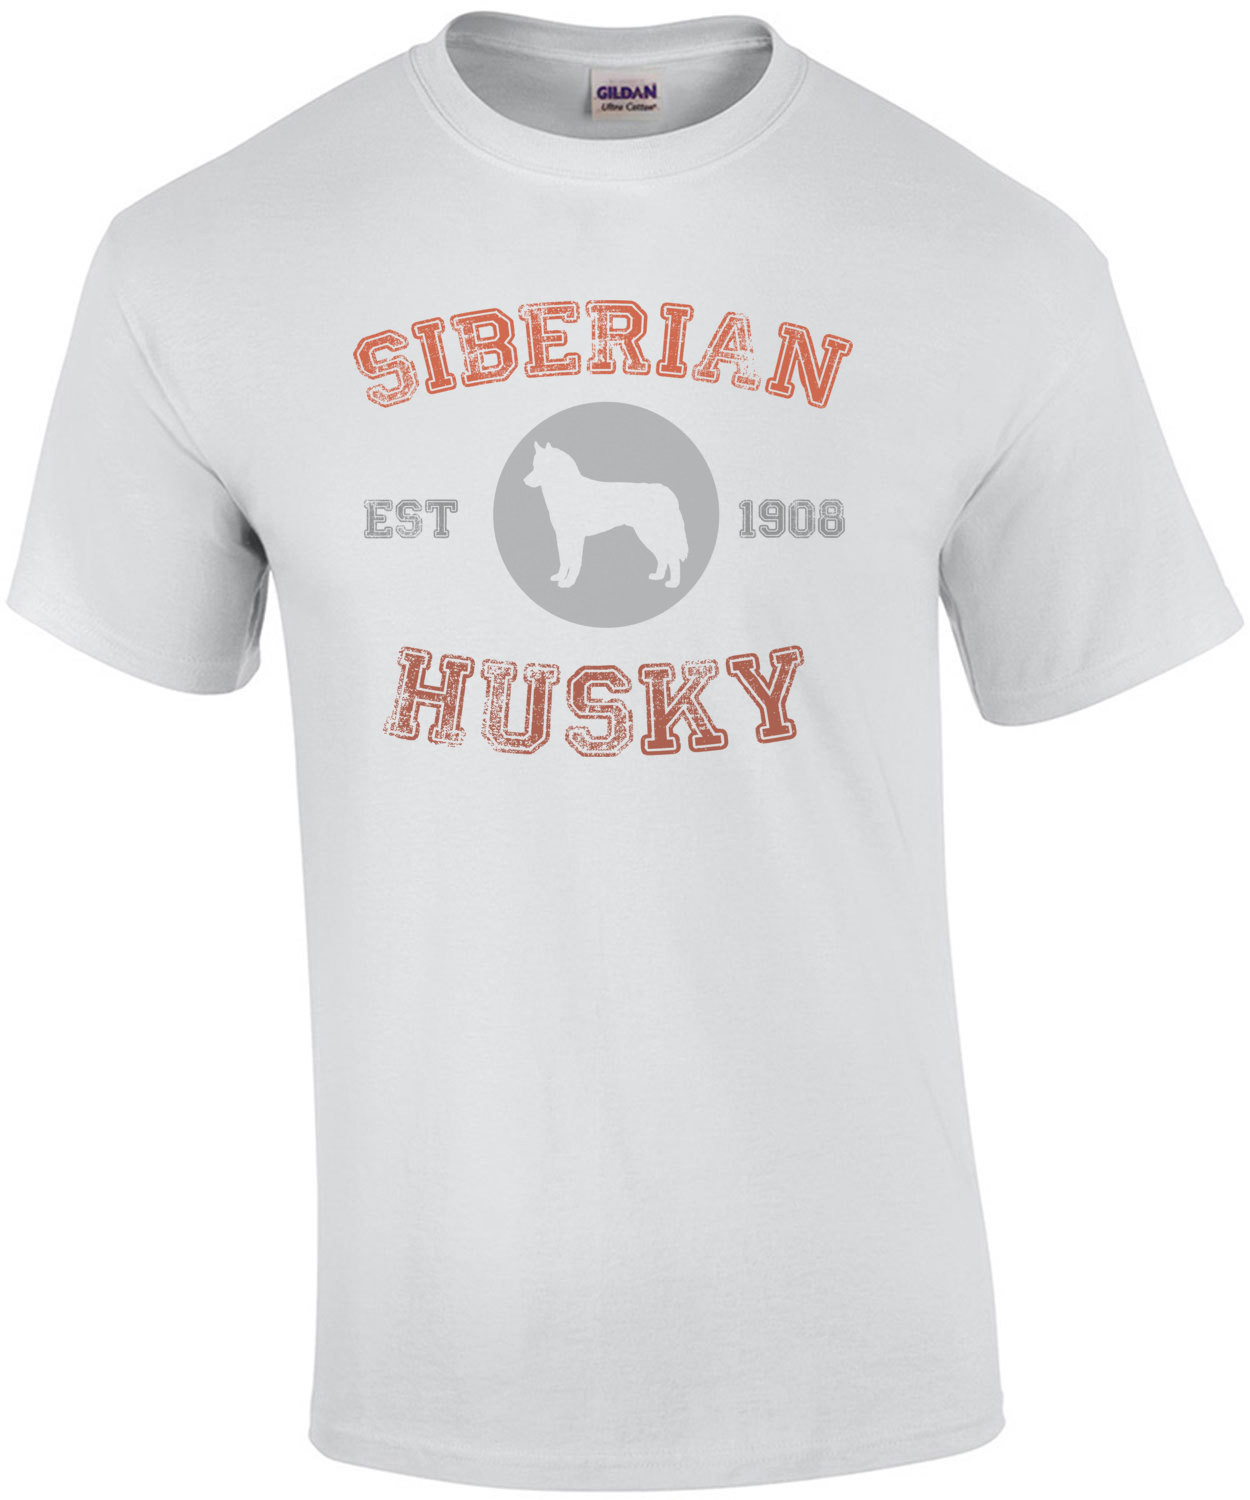 Siberian Husky Est 1908 - Siberian Husky